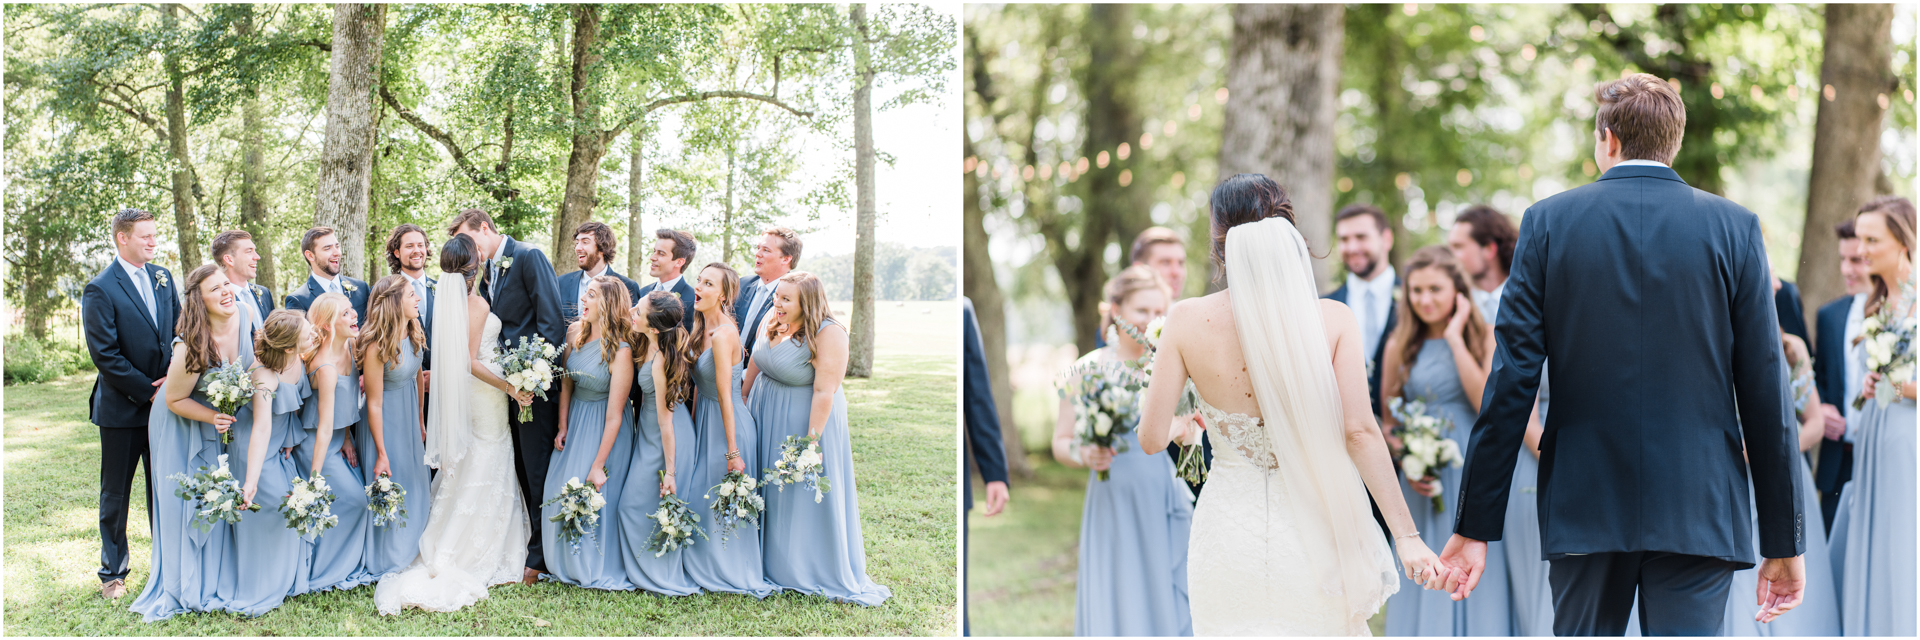 Bride and Groom - Blue Wedding - Outdoor bridal party photos - harvest hollow - Huntsville Alabama